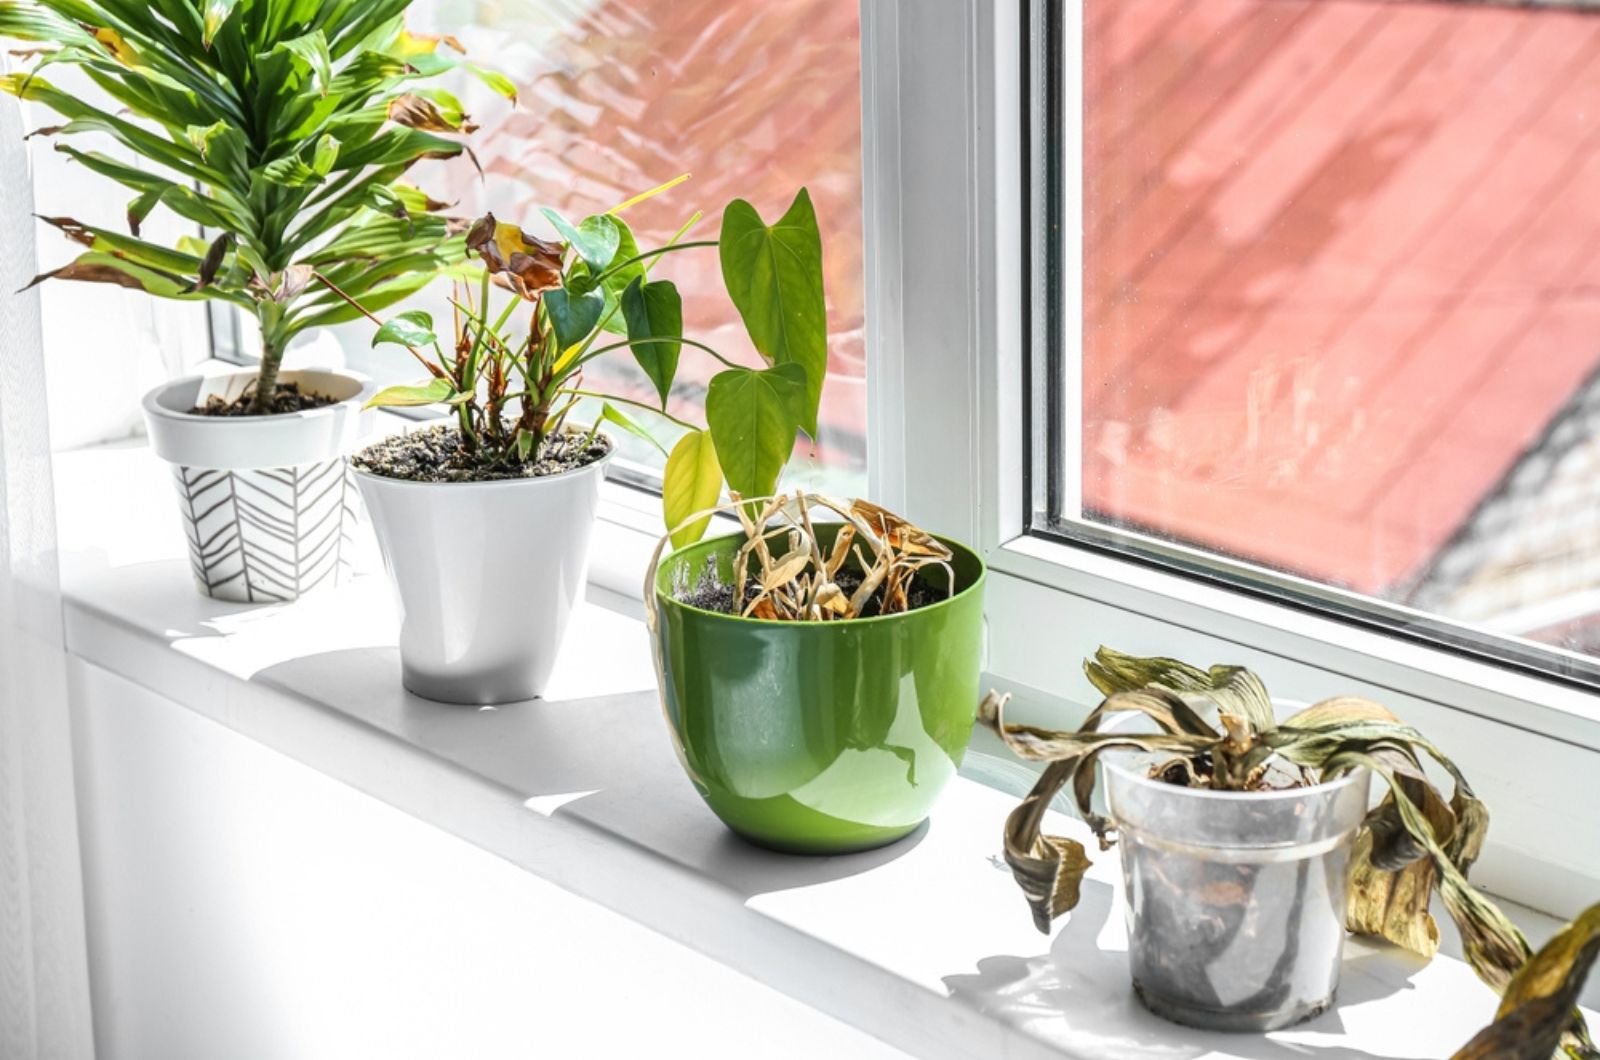 wilted plants on the window shelf